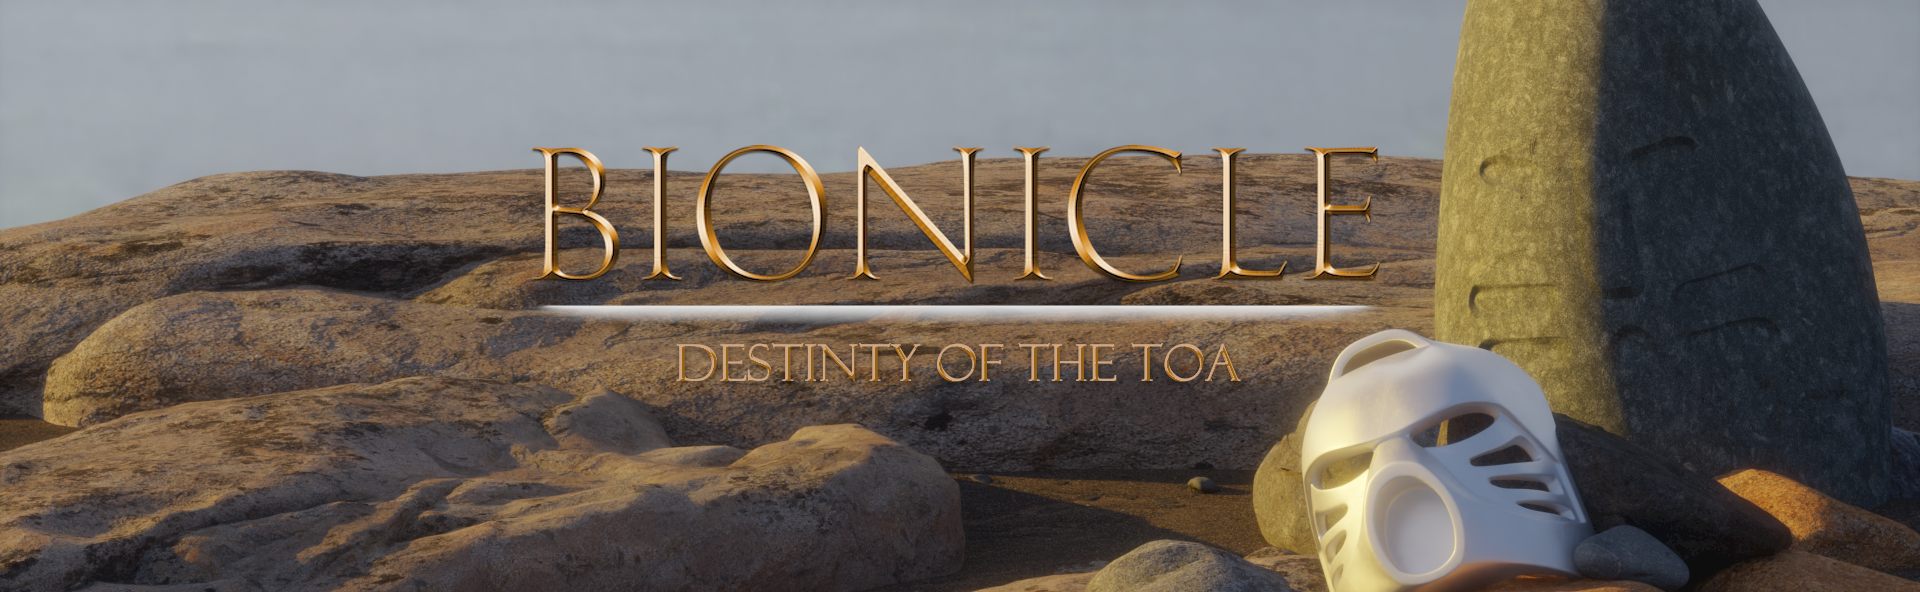 Bionicle: Destiny of the Toa